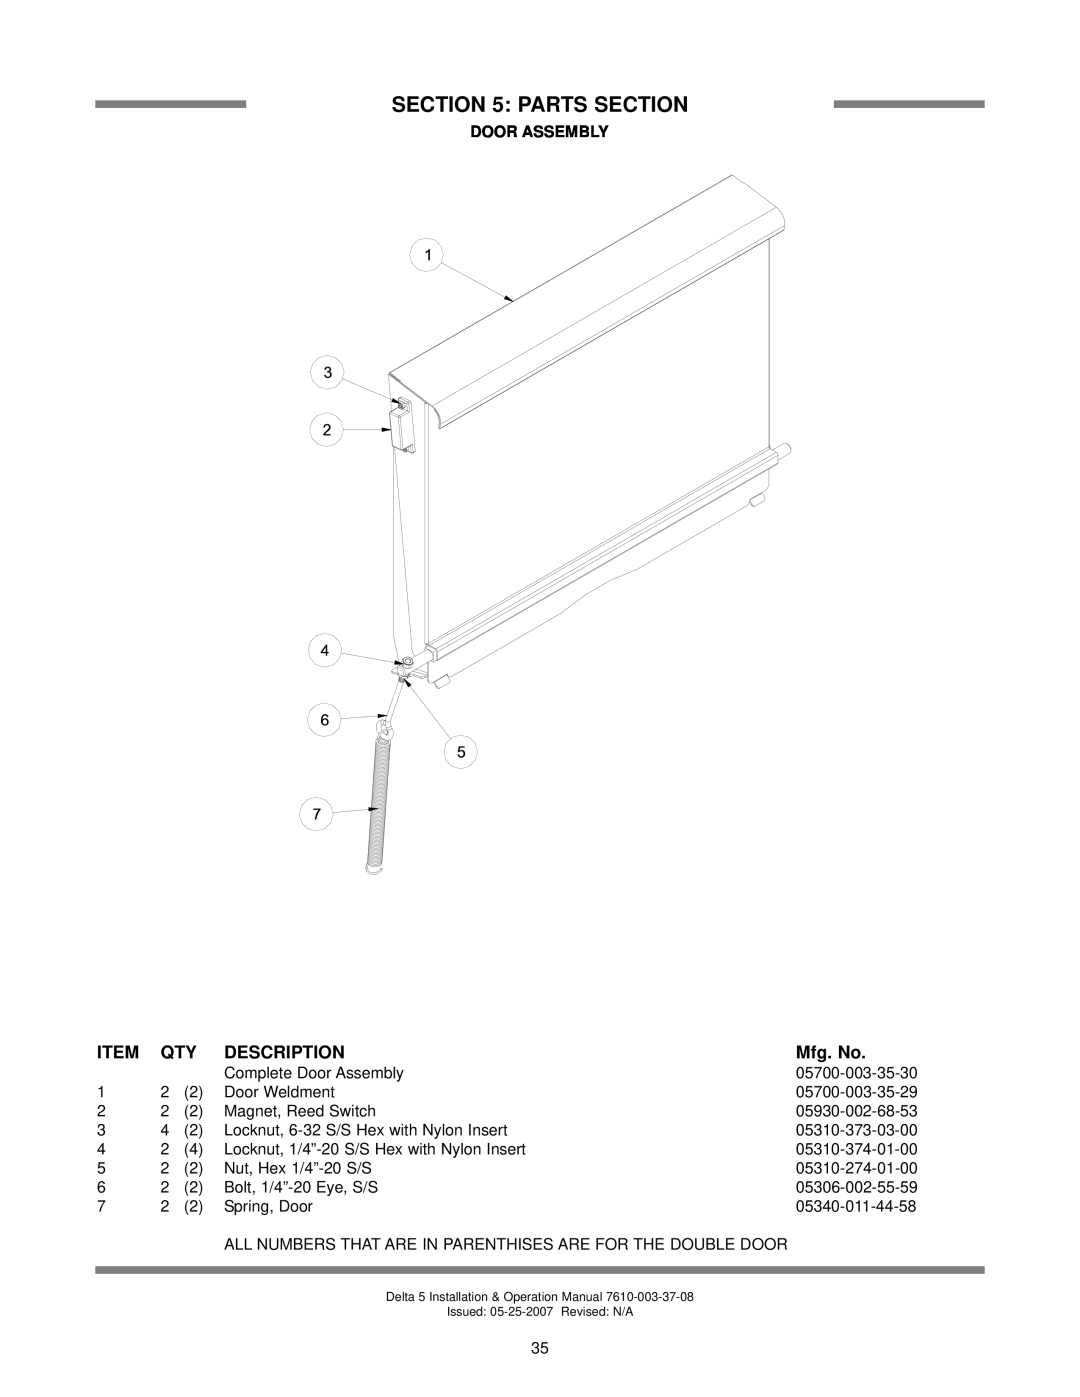 Jackson DELTA 5 D, Delta 5 technical manual Door Assembly, Parts Section, Description, Mfg. No 